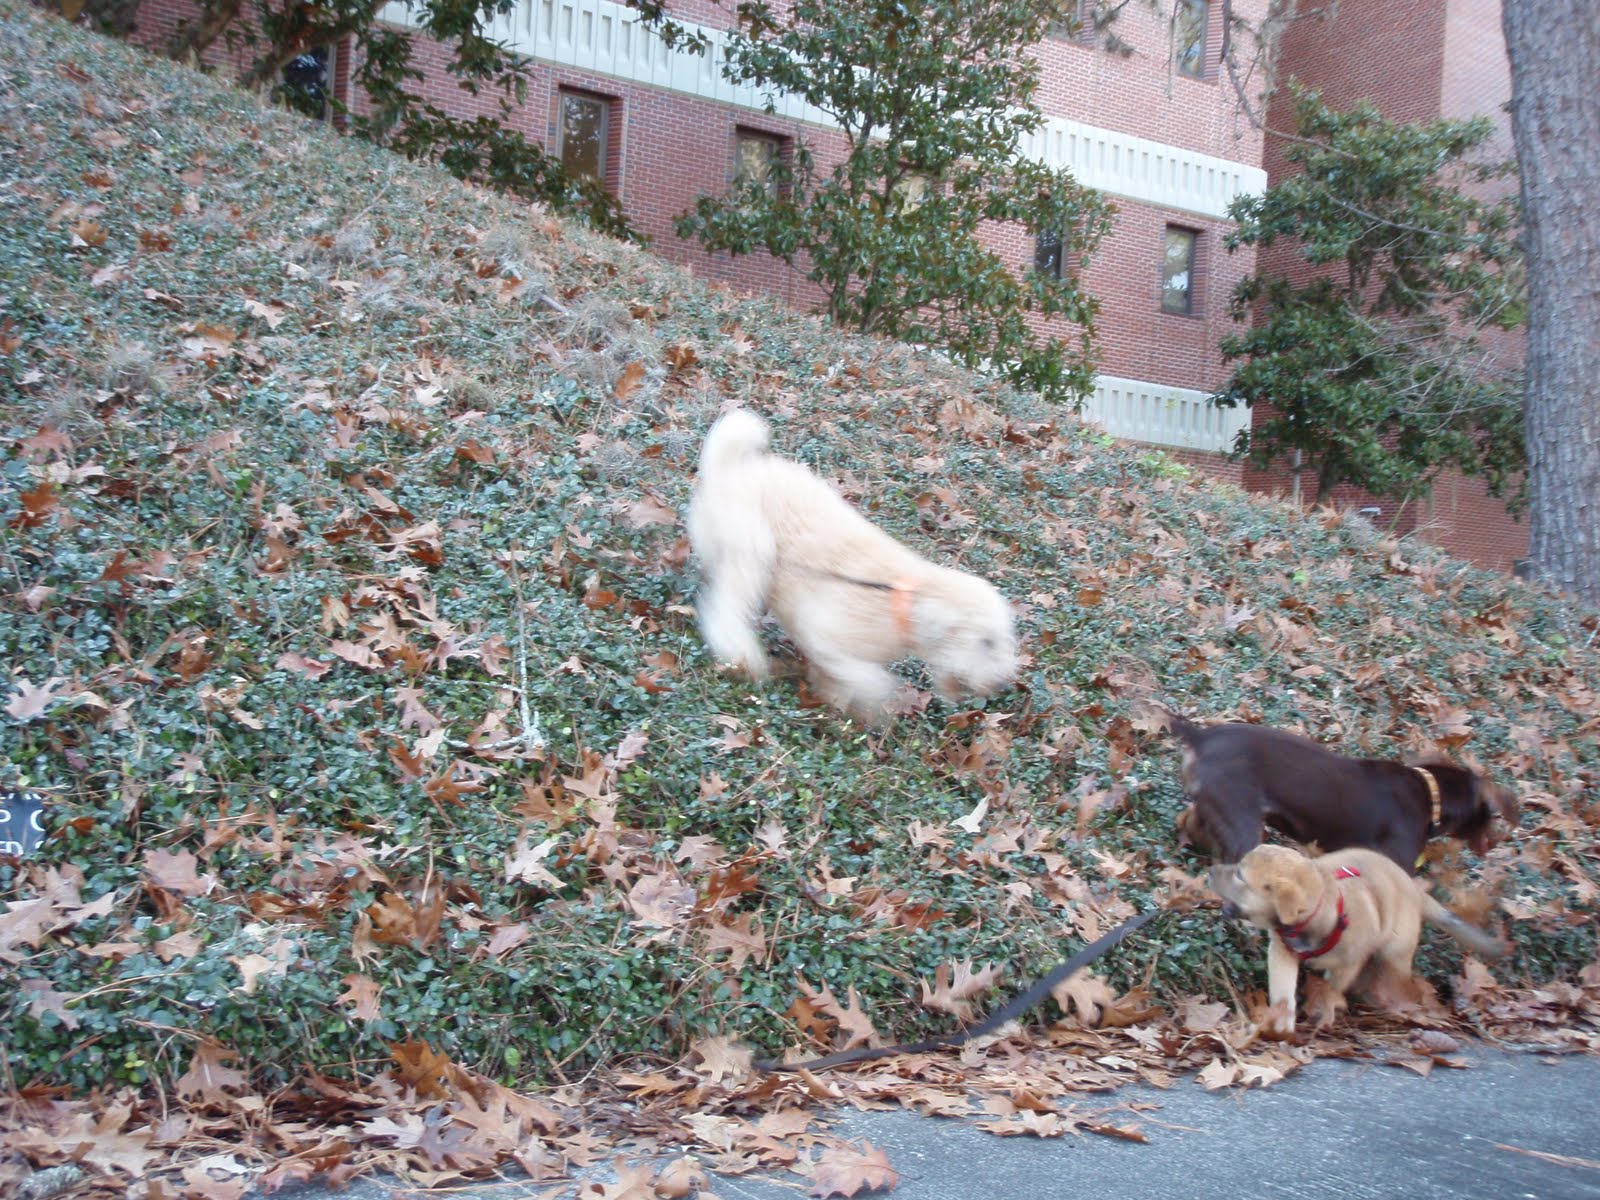 Mookie, Motu, and Puka romping on the jasmine-covered berm outside Dickinson Hall.